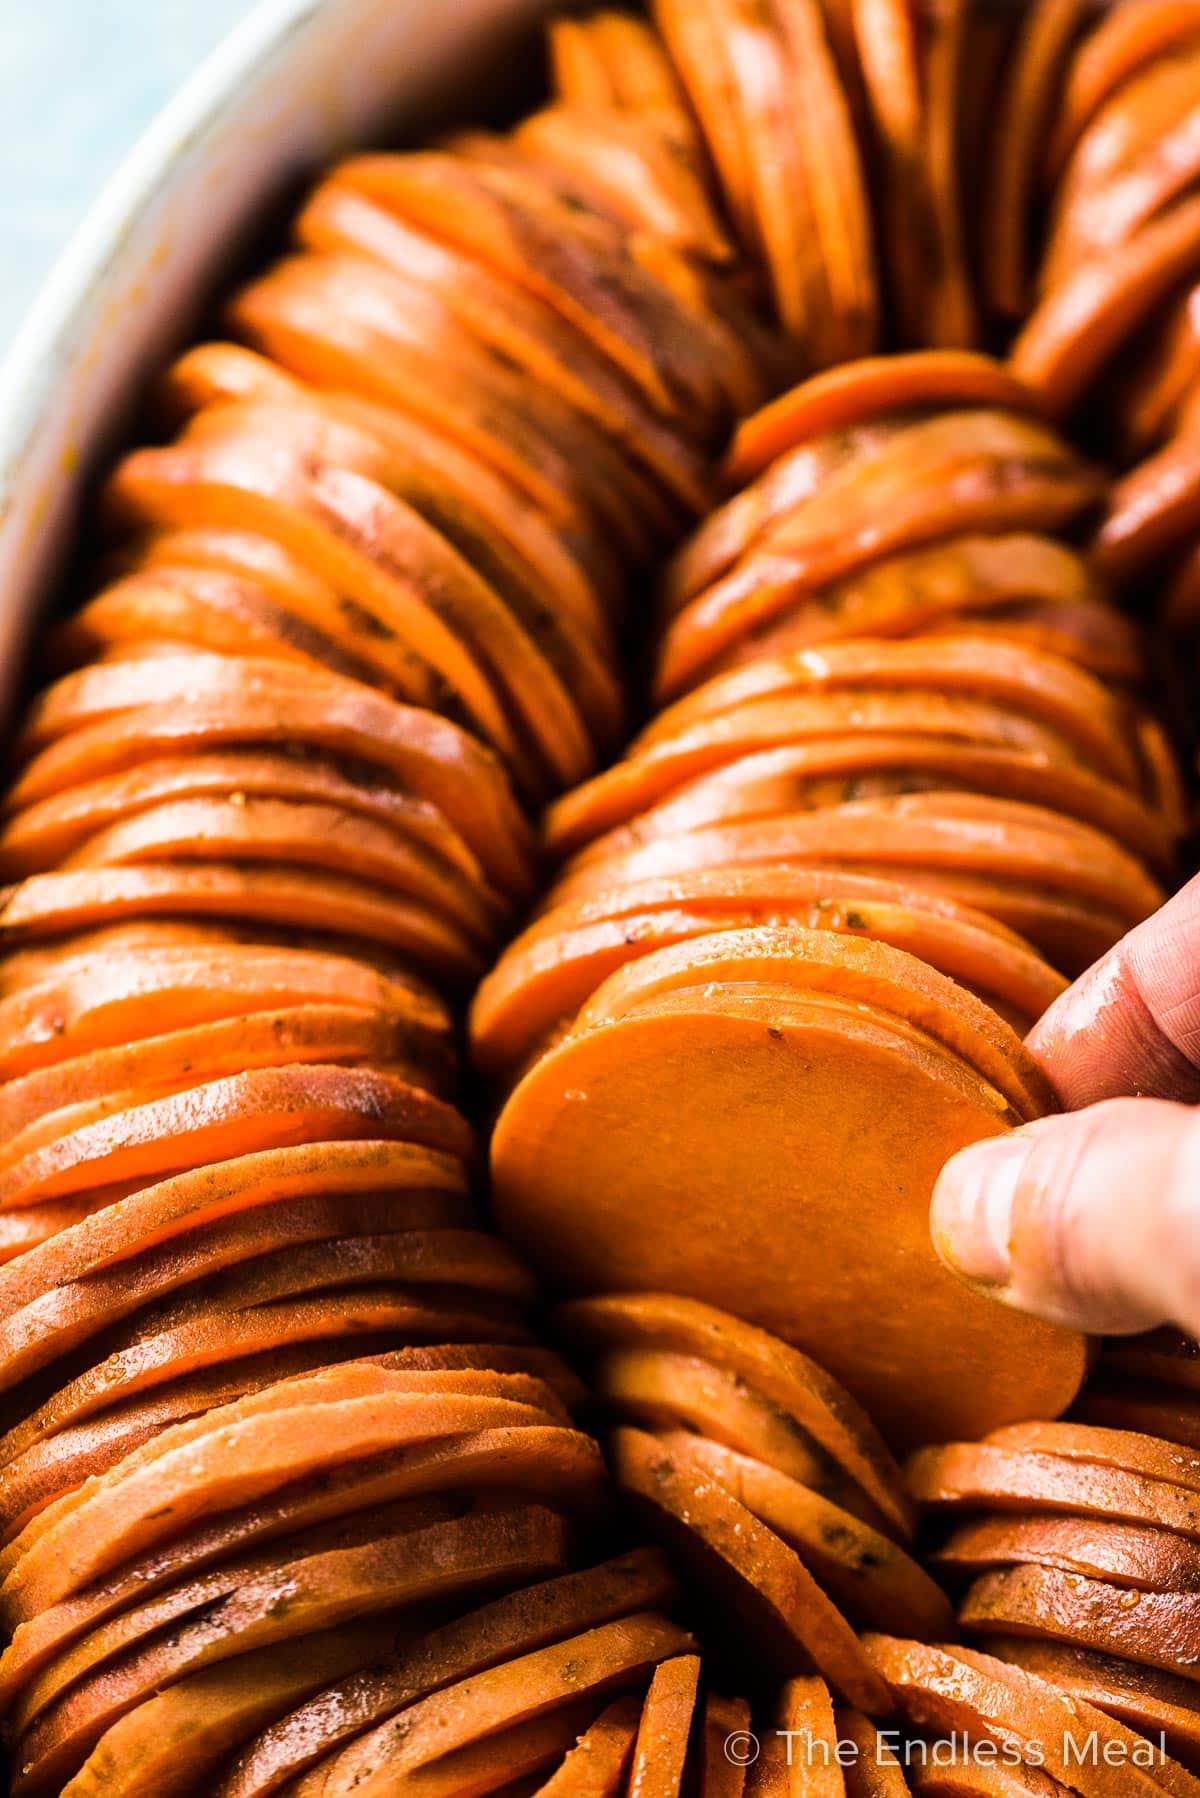 A hand assembling this shingled sweet potato casserole.